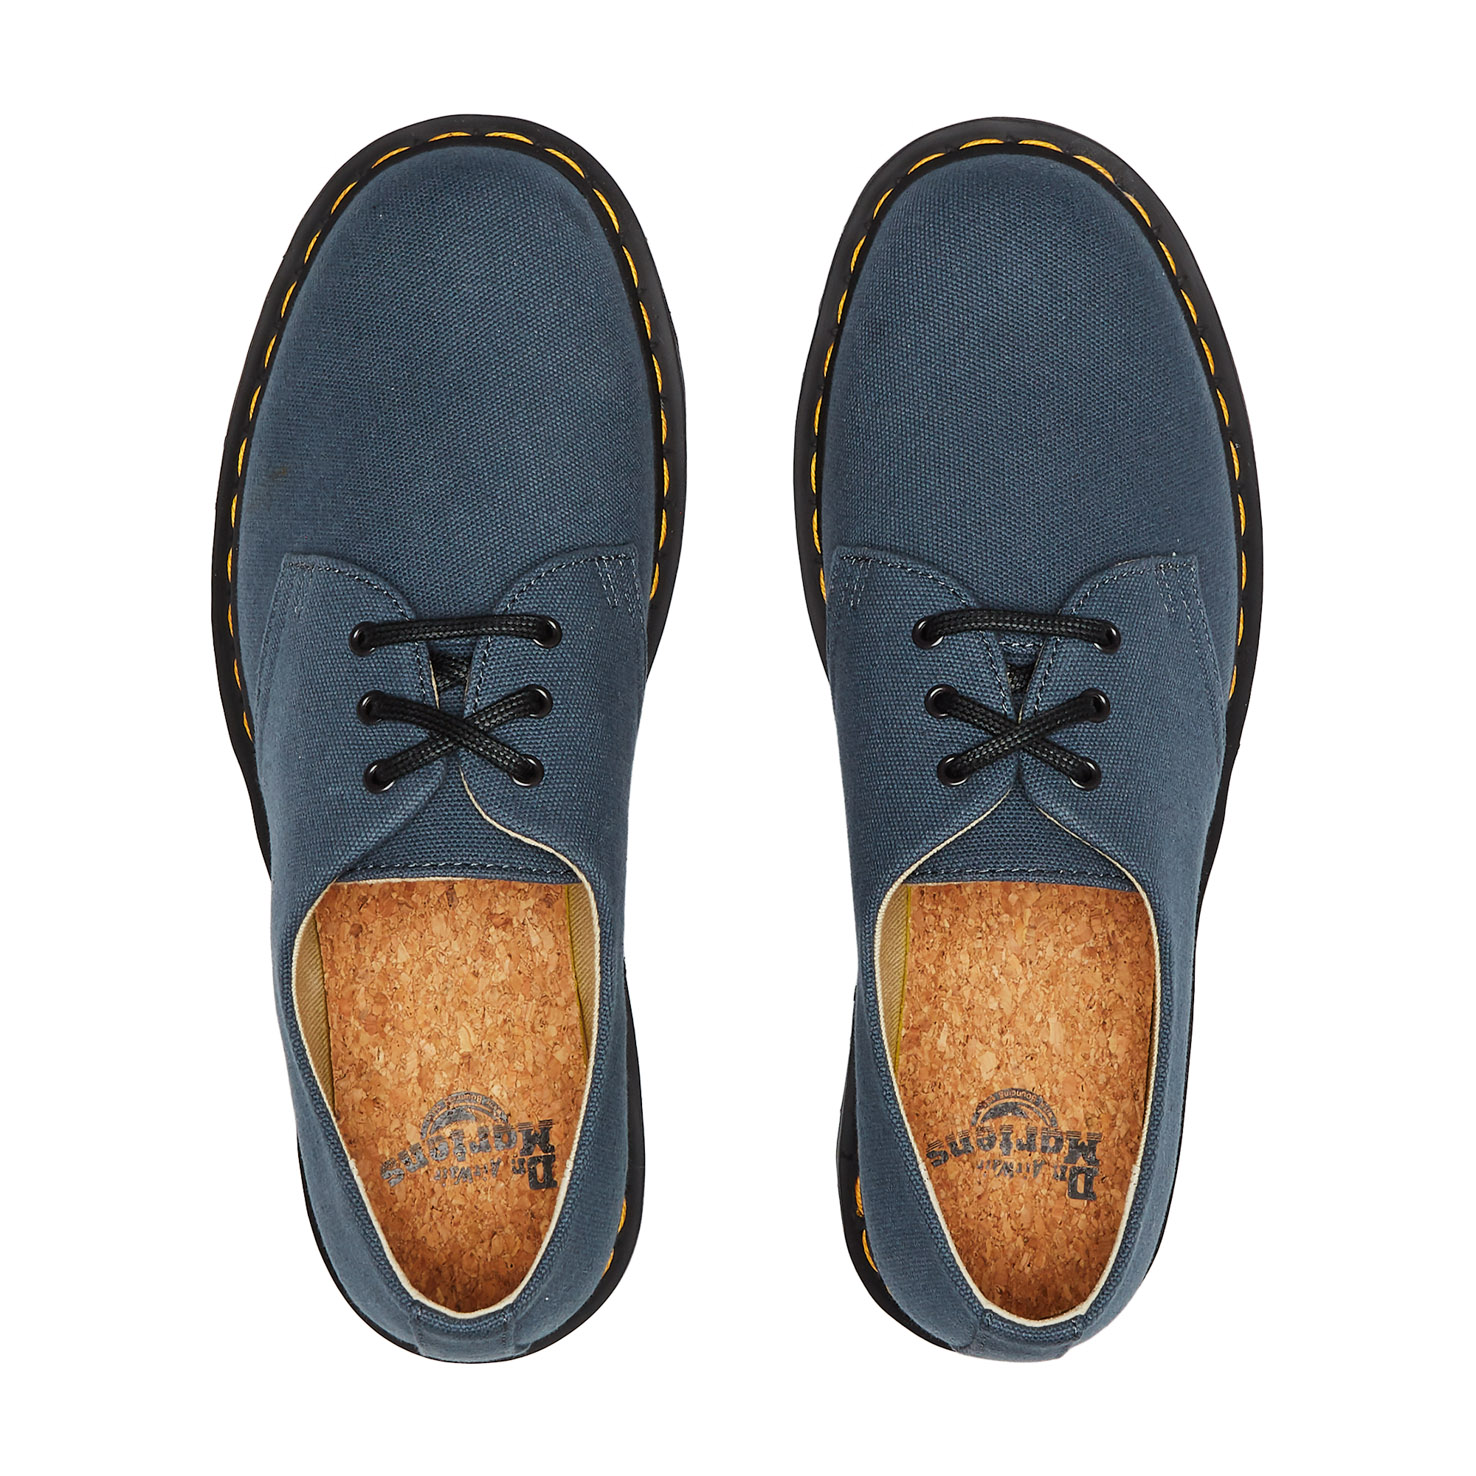 1461 Canvas Oxford Shoes DR.MARTENS, размер 40, цвет синий DM27211 - фото 3